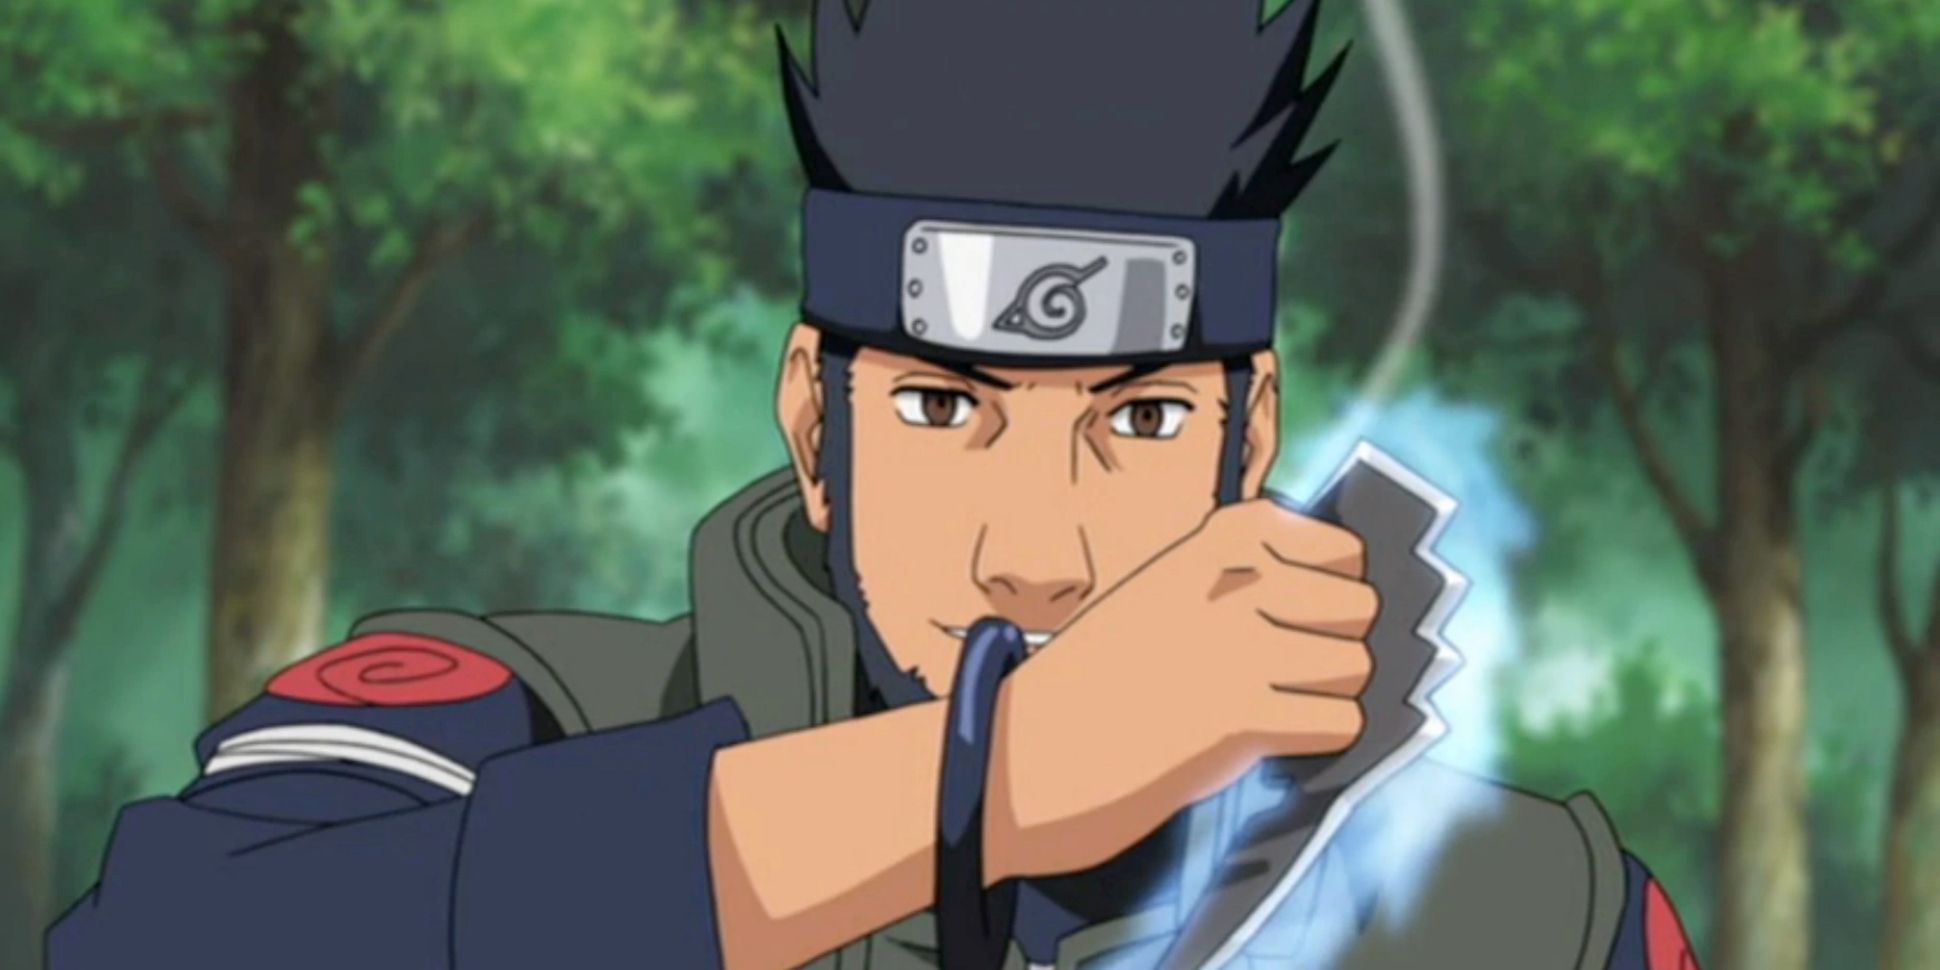 Asuma Sarutobi preparing for combat in Naruto.